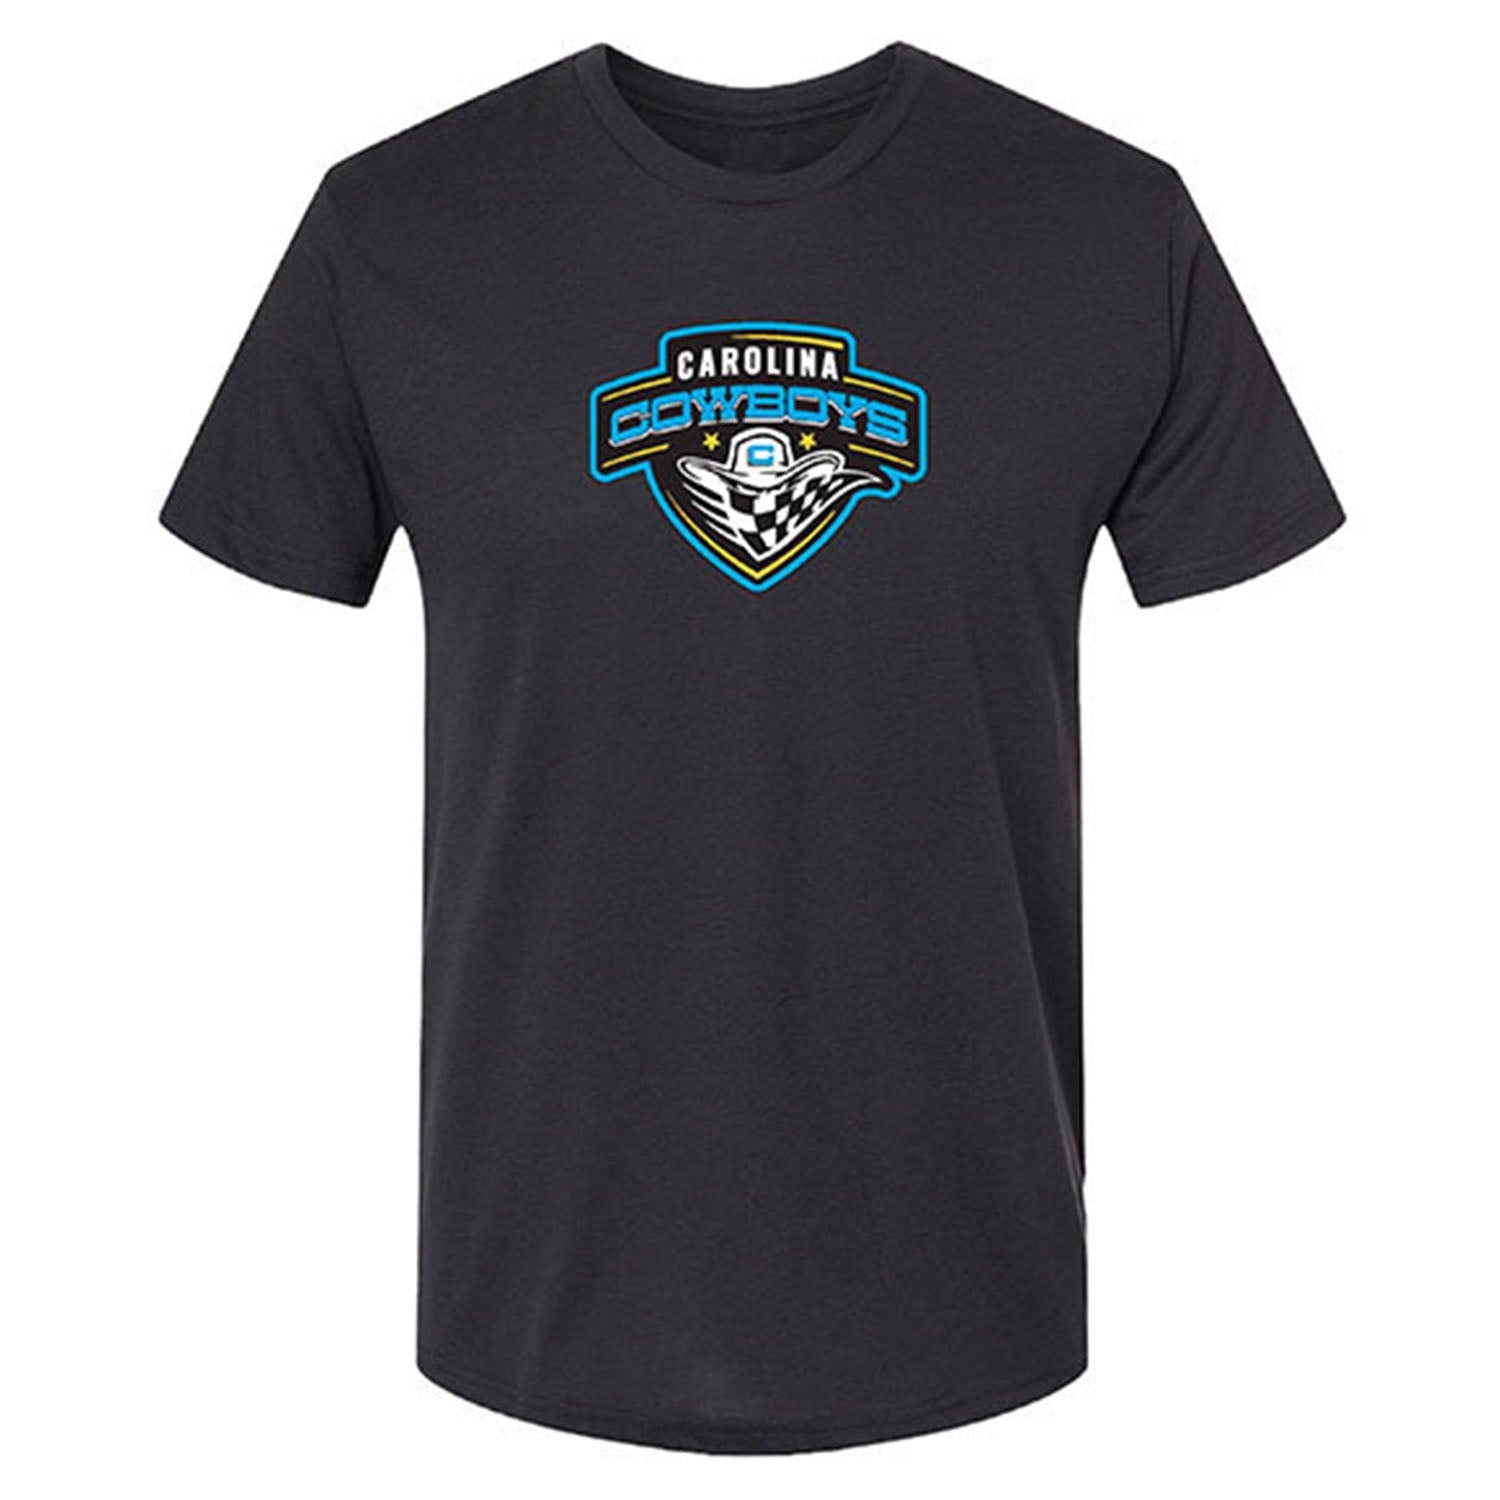 Carolina Cowboys T-Shirt